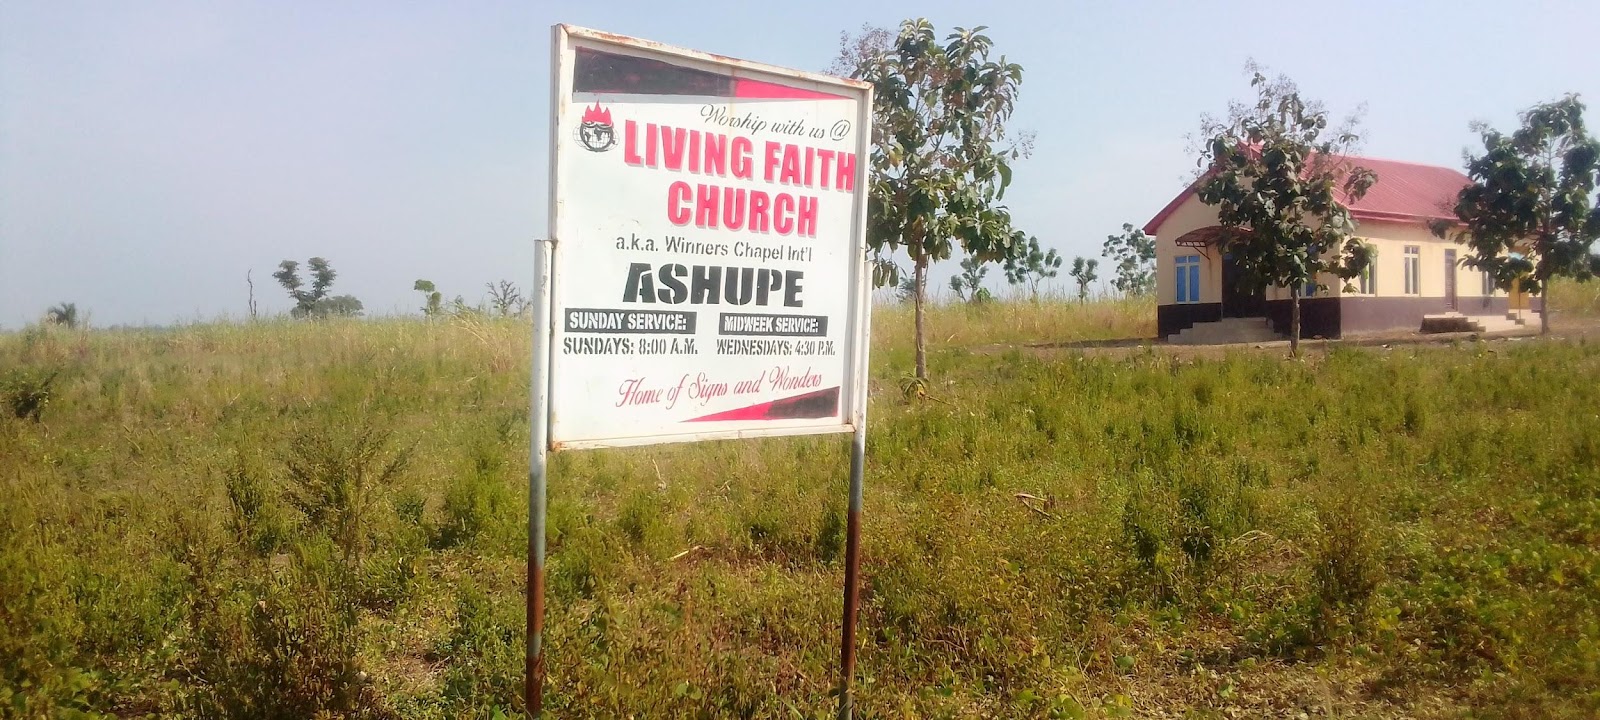 Living Faith Church, Ashupe, where Elesha is a member 